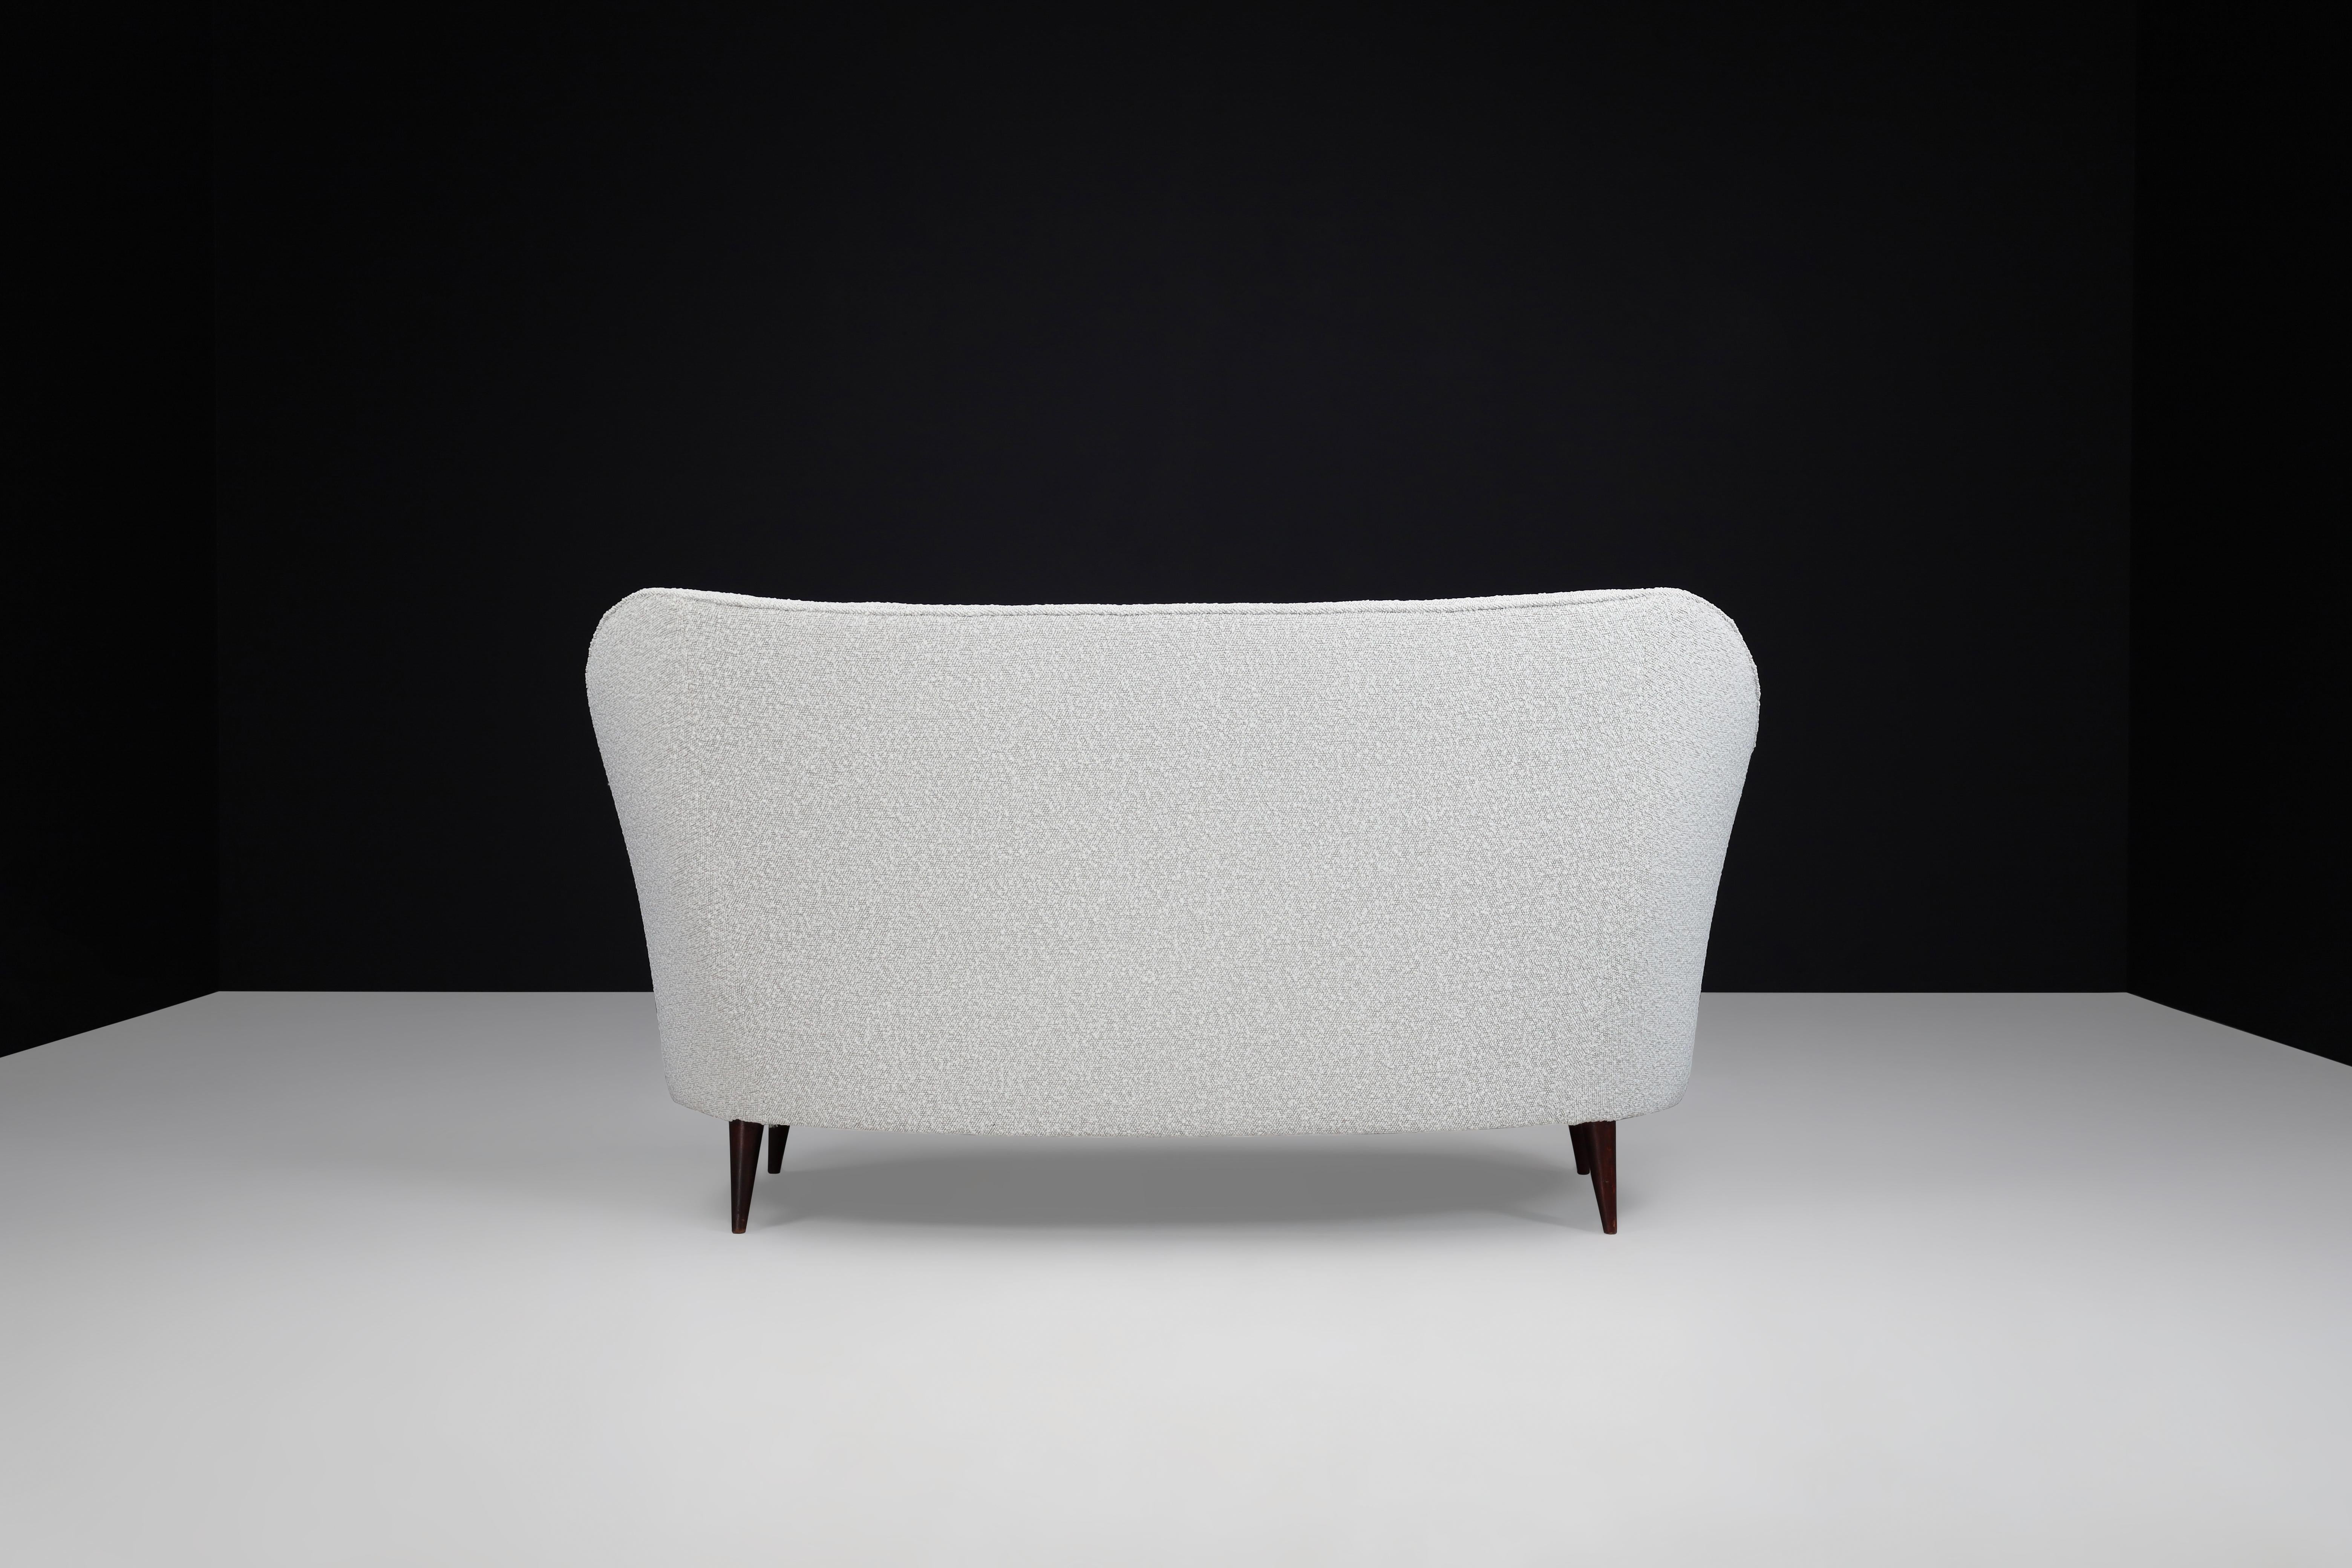 Gio Ponti for Casa E Giardino Midcentury Sofa in Bouclé Upholstery Italy 1940s  For Sale 1